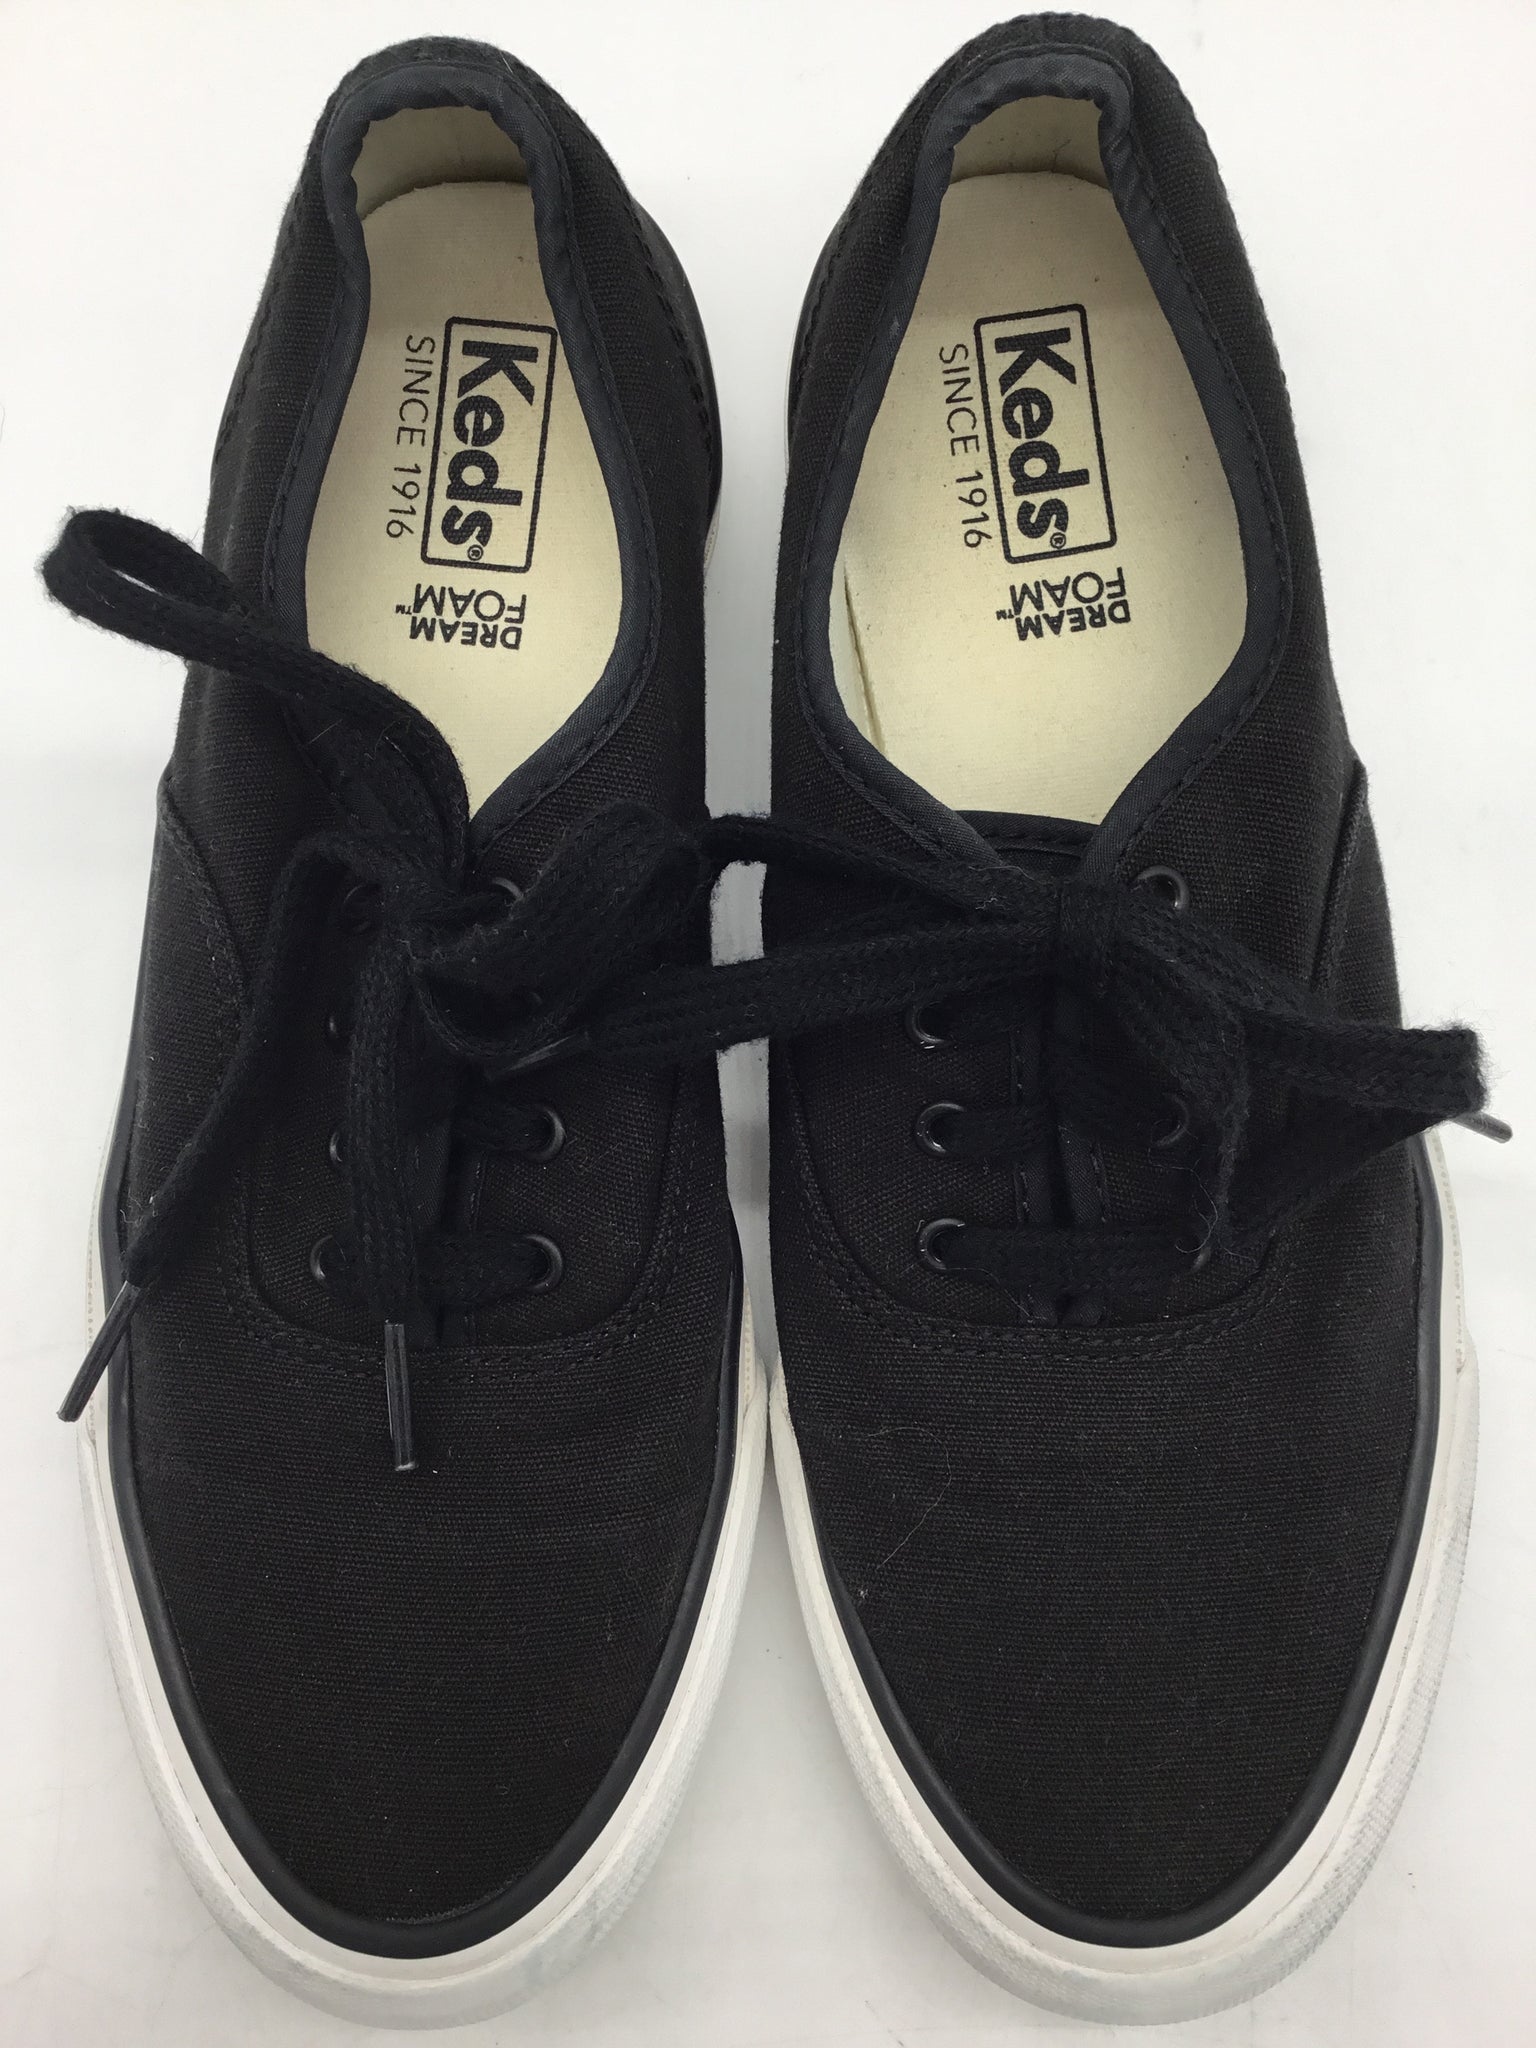 Ked's Size 6 Black & White Shoes